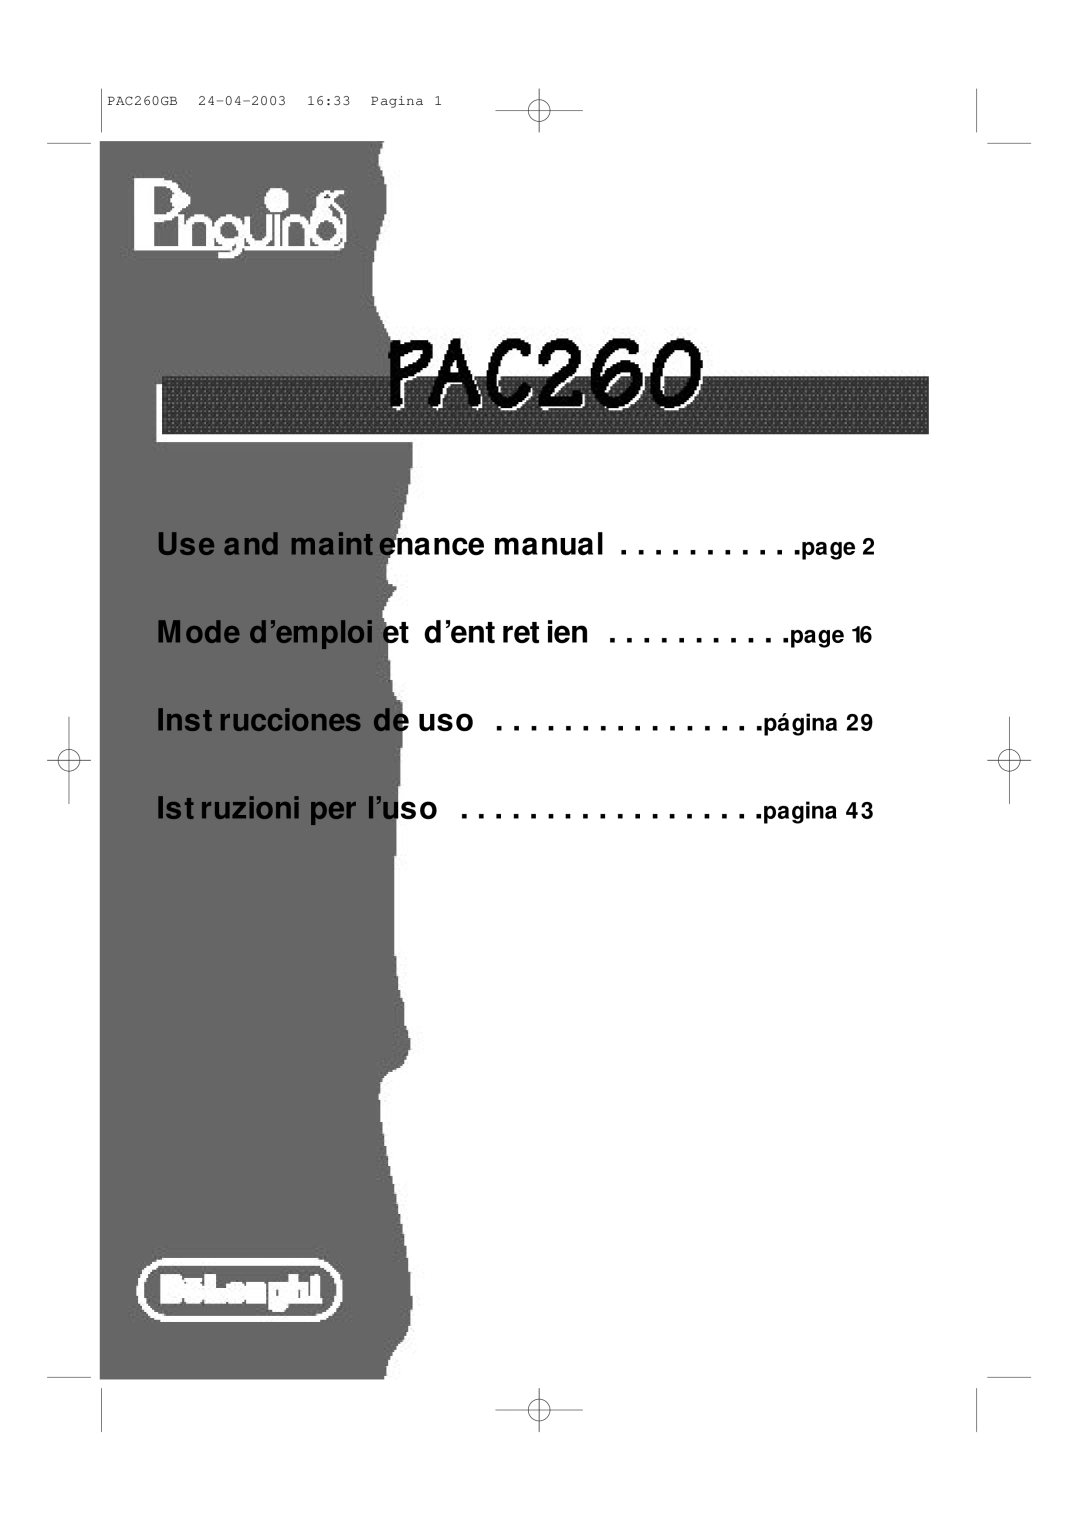 DeLonghi manual PAC260GB 24-04-200316 33 Pagina 